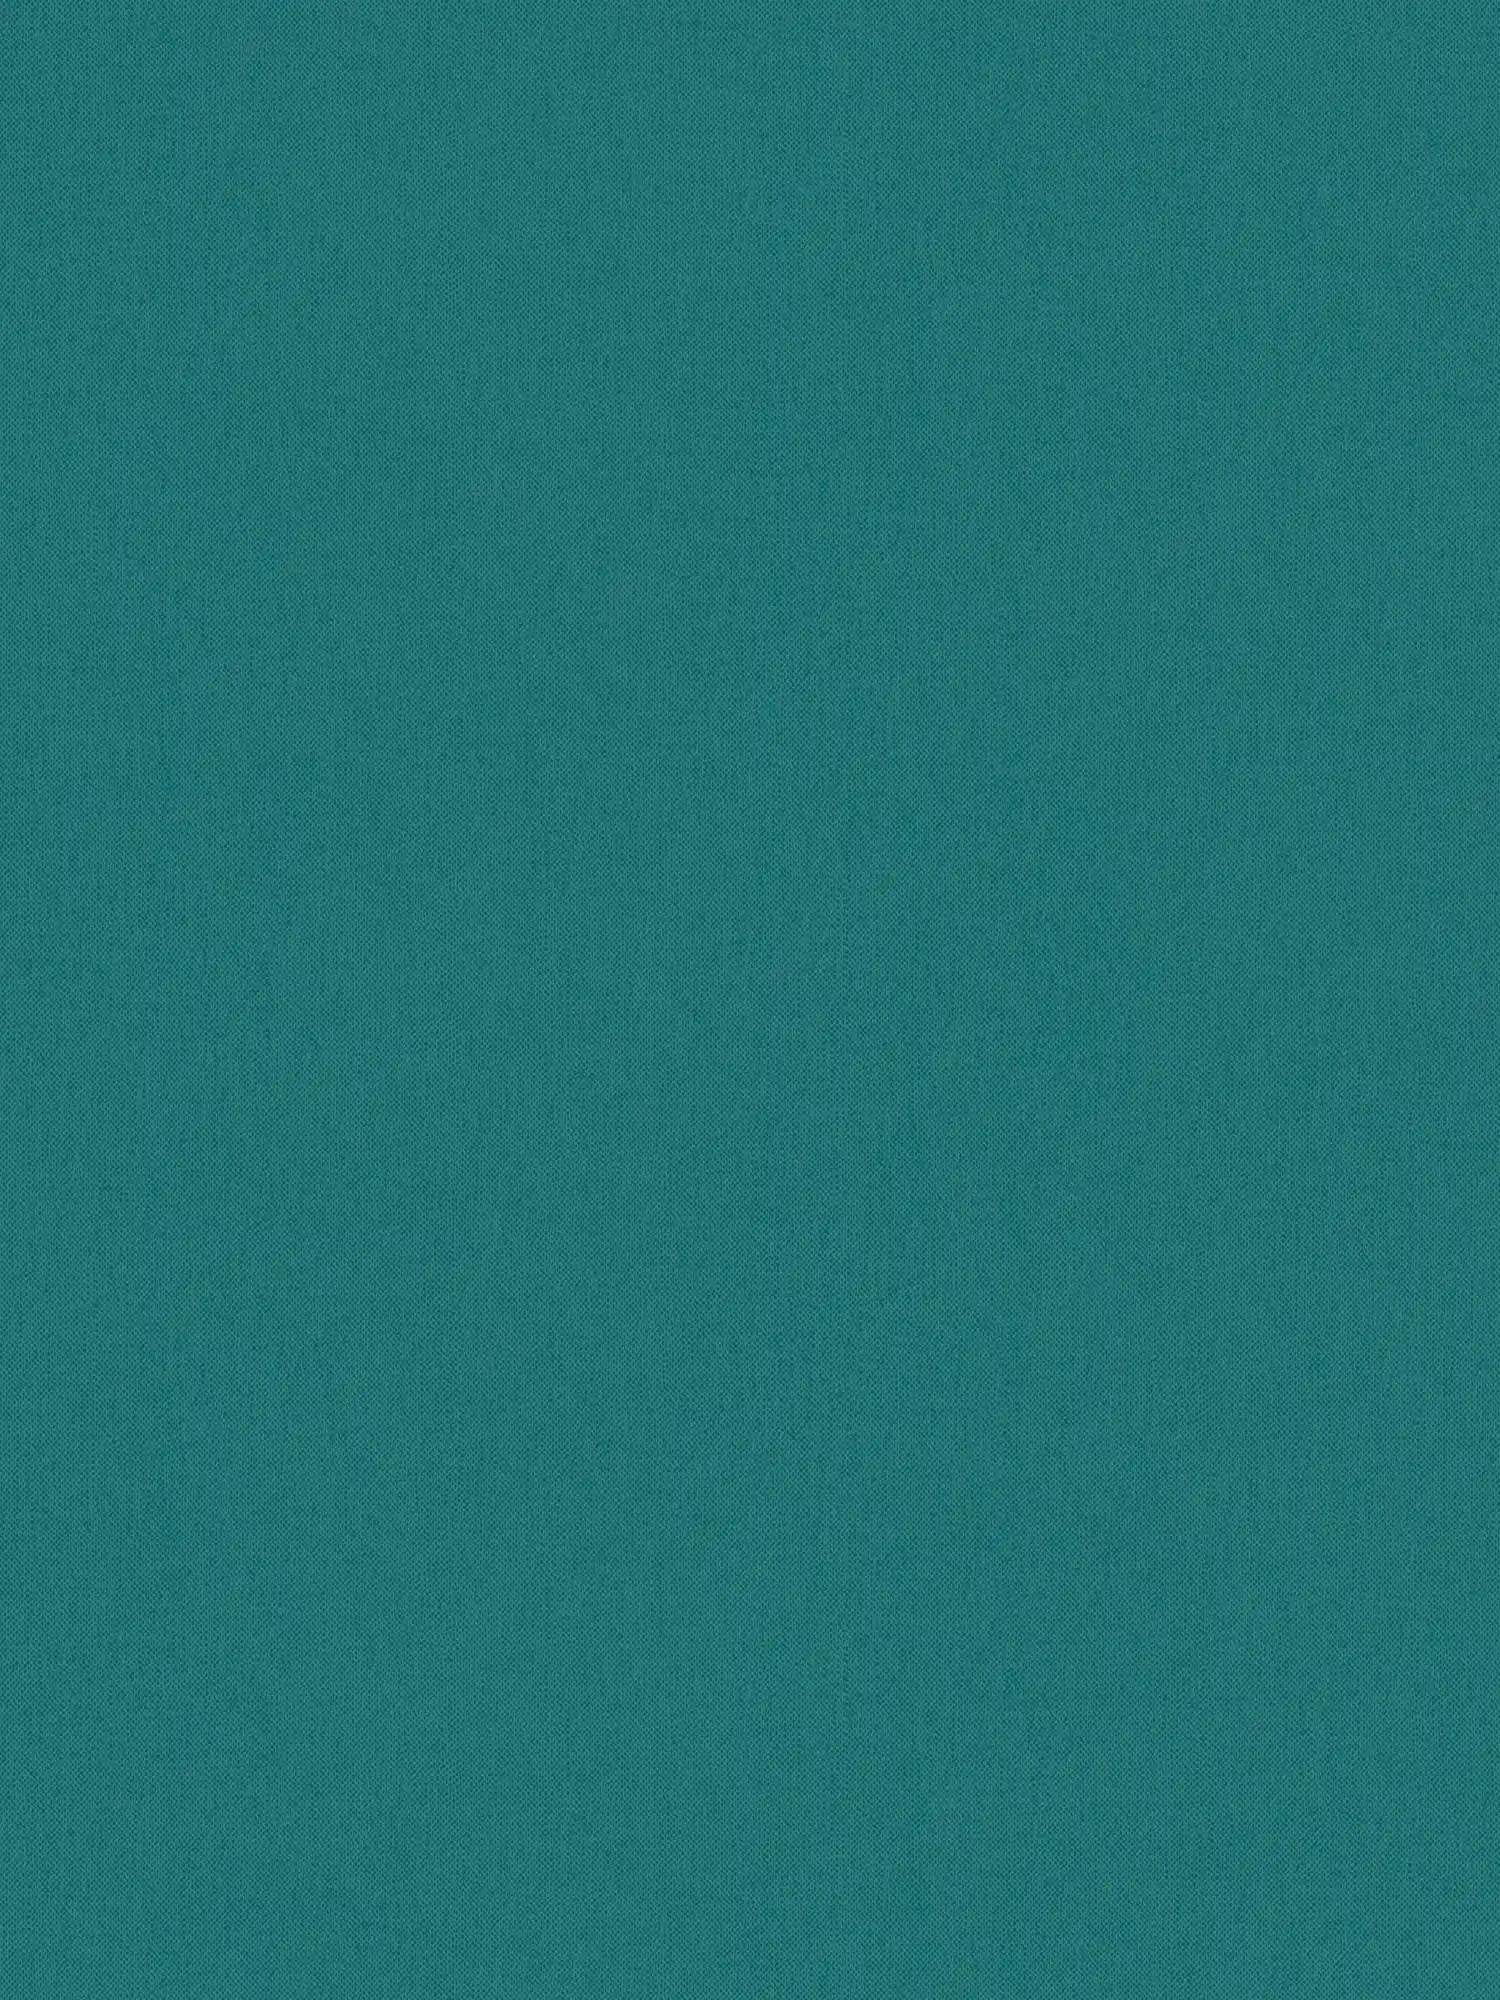 wallpaper dark green with textile texture matte plain water blue
